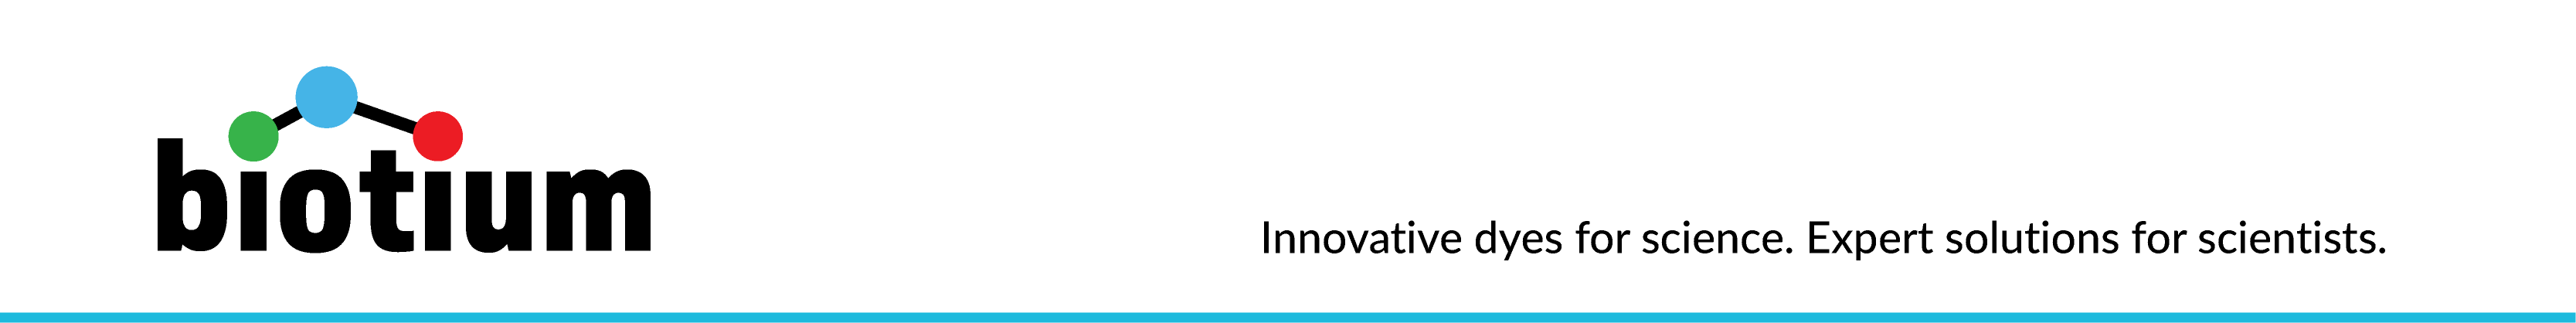 biotium_logo_Innovative_dyes_for_science.png